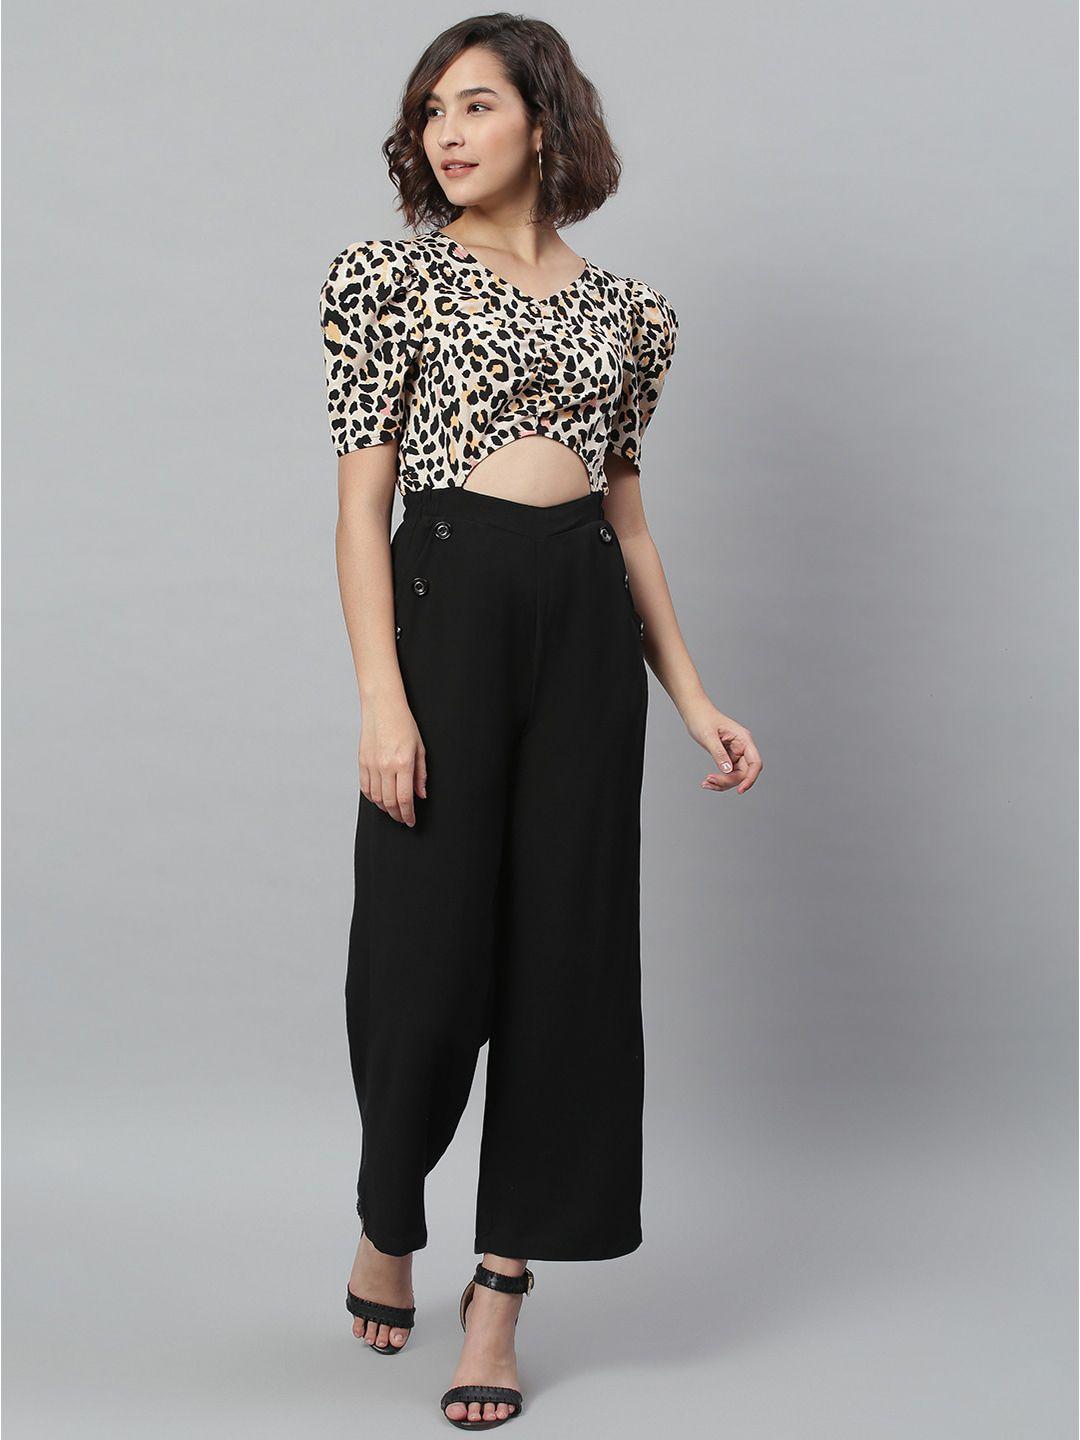 kassually-women-black-&-cream-coloured-colourblocked-leopard-printed-basic-jumpsuit